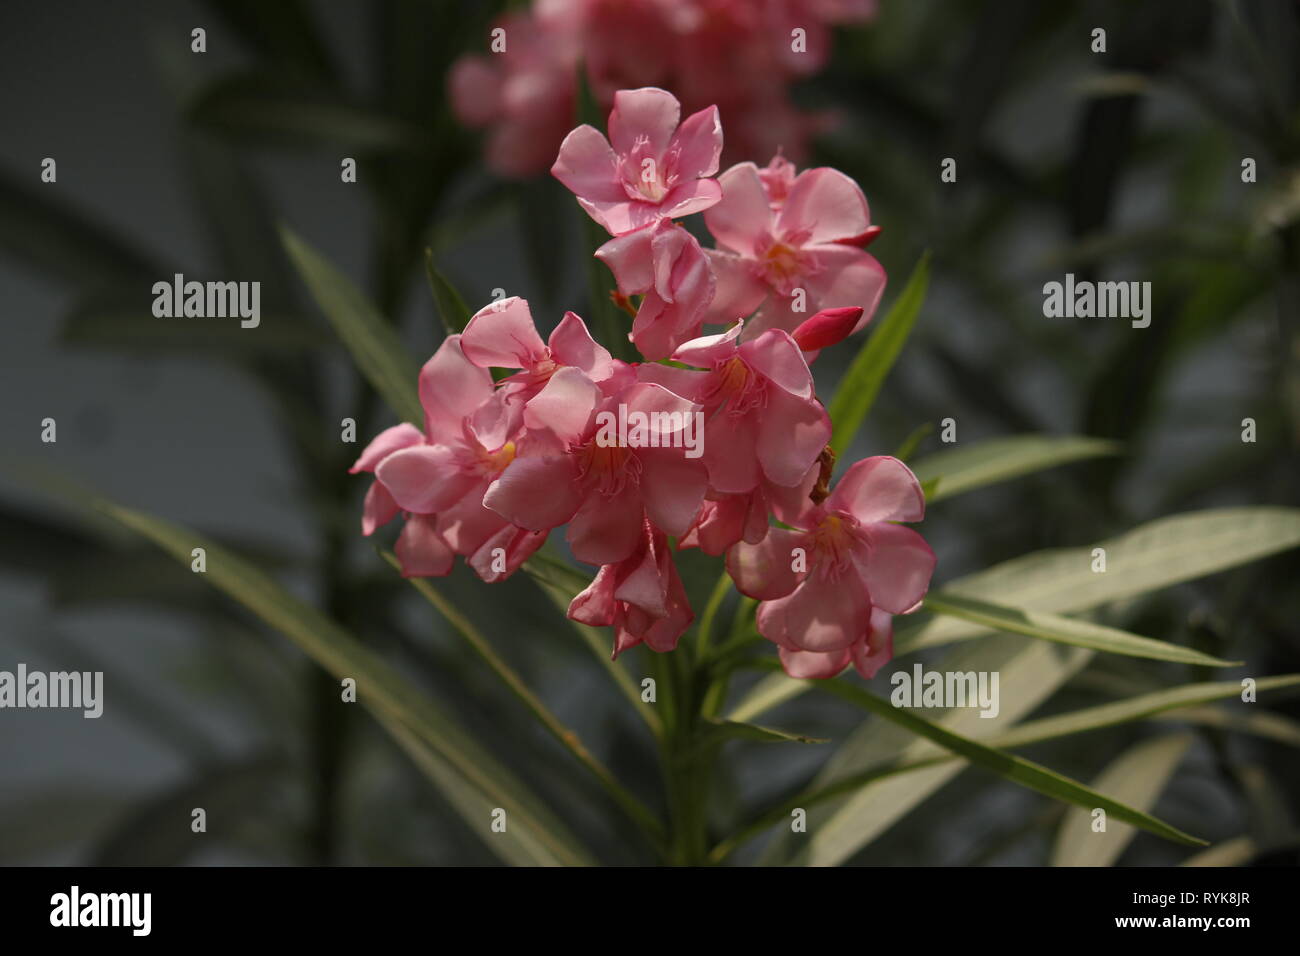 flower photo Stock Photo